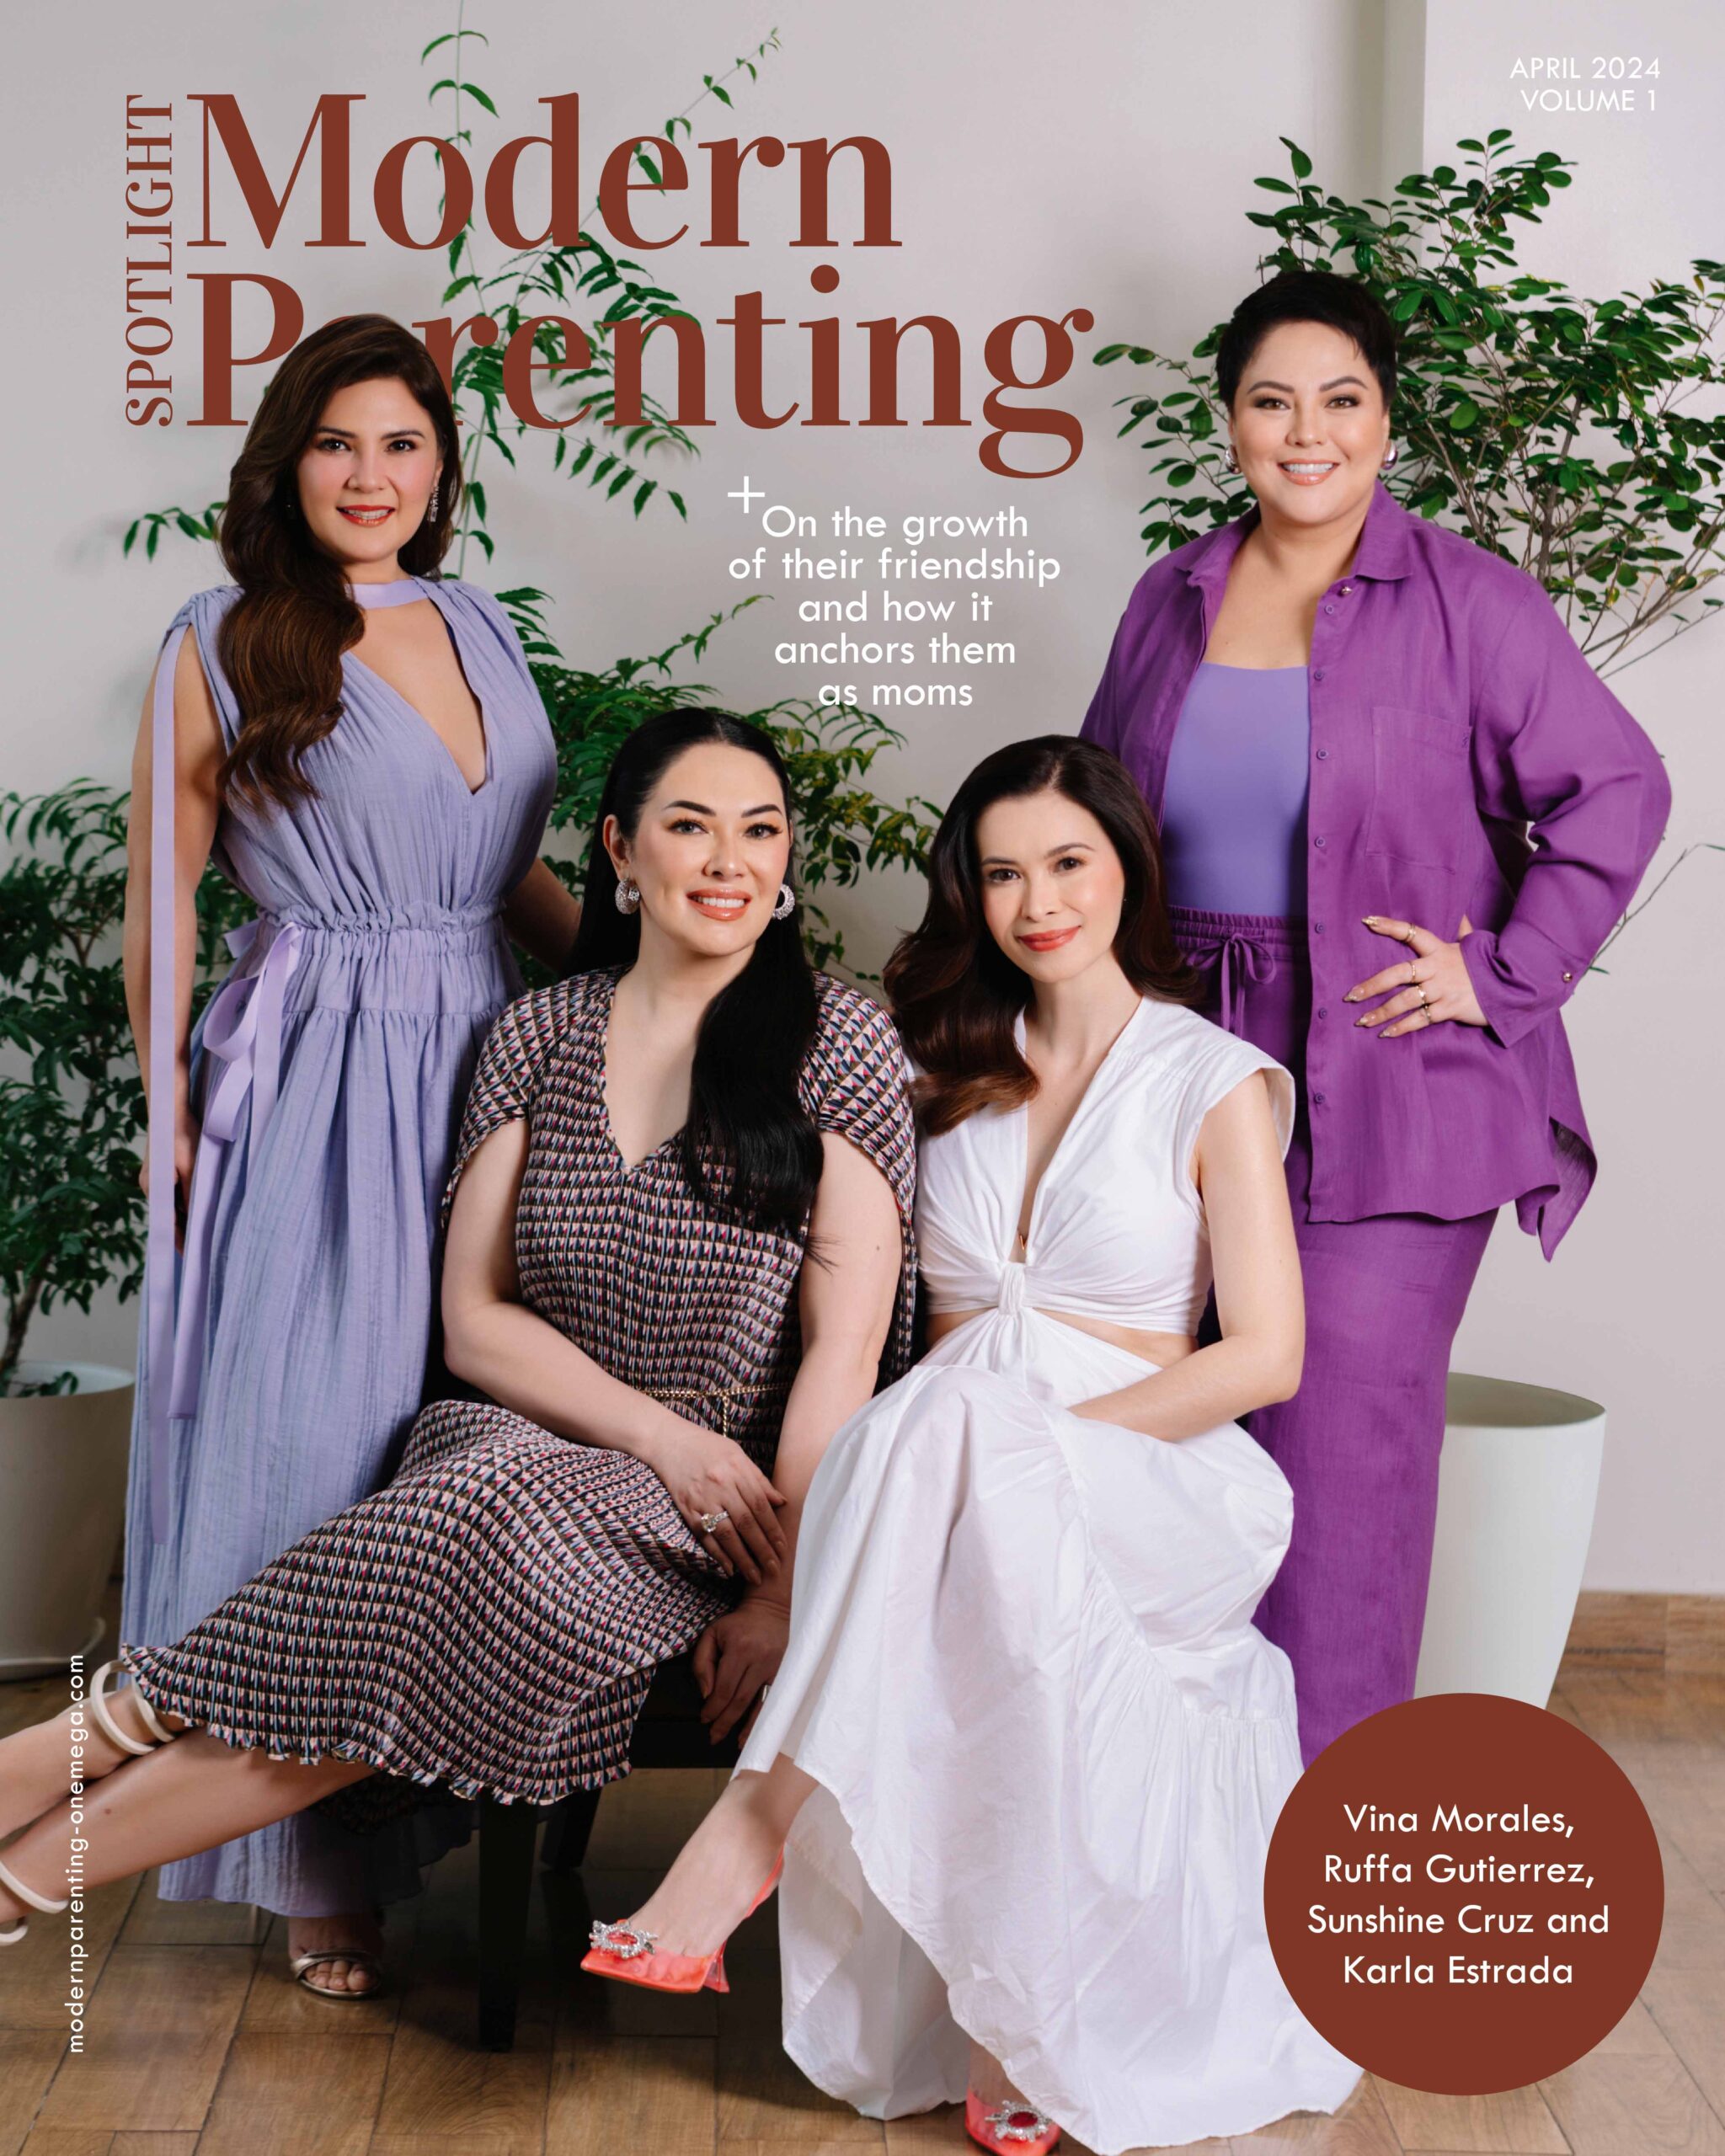 Ruffa Gutierrez, Sunshine Cruz, Vina Morales, and Karla Estradan Modern Parenting Spotlight April 2024